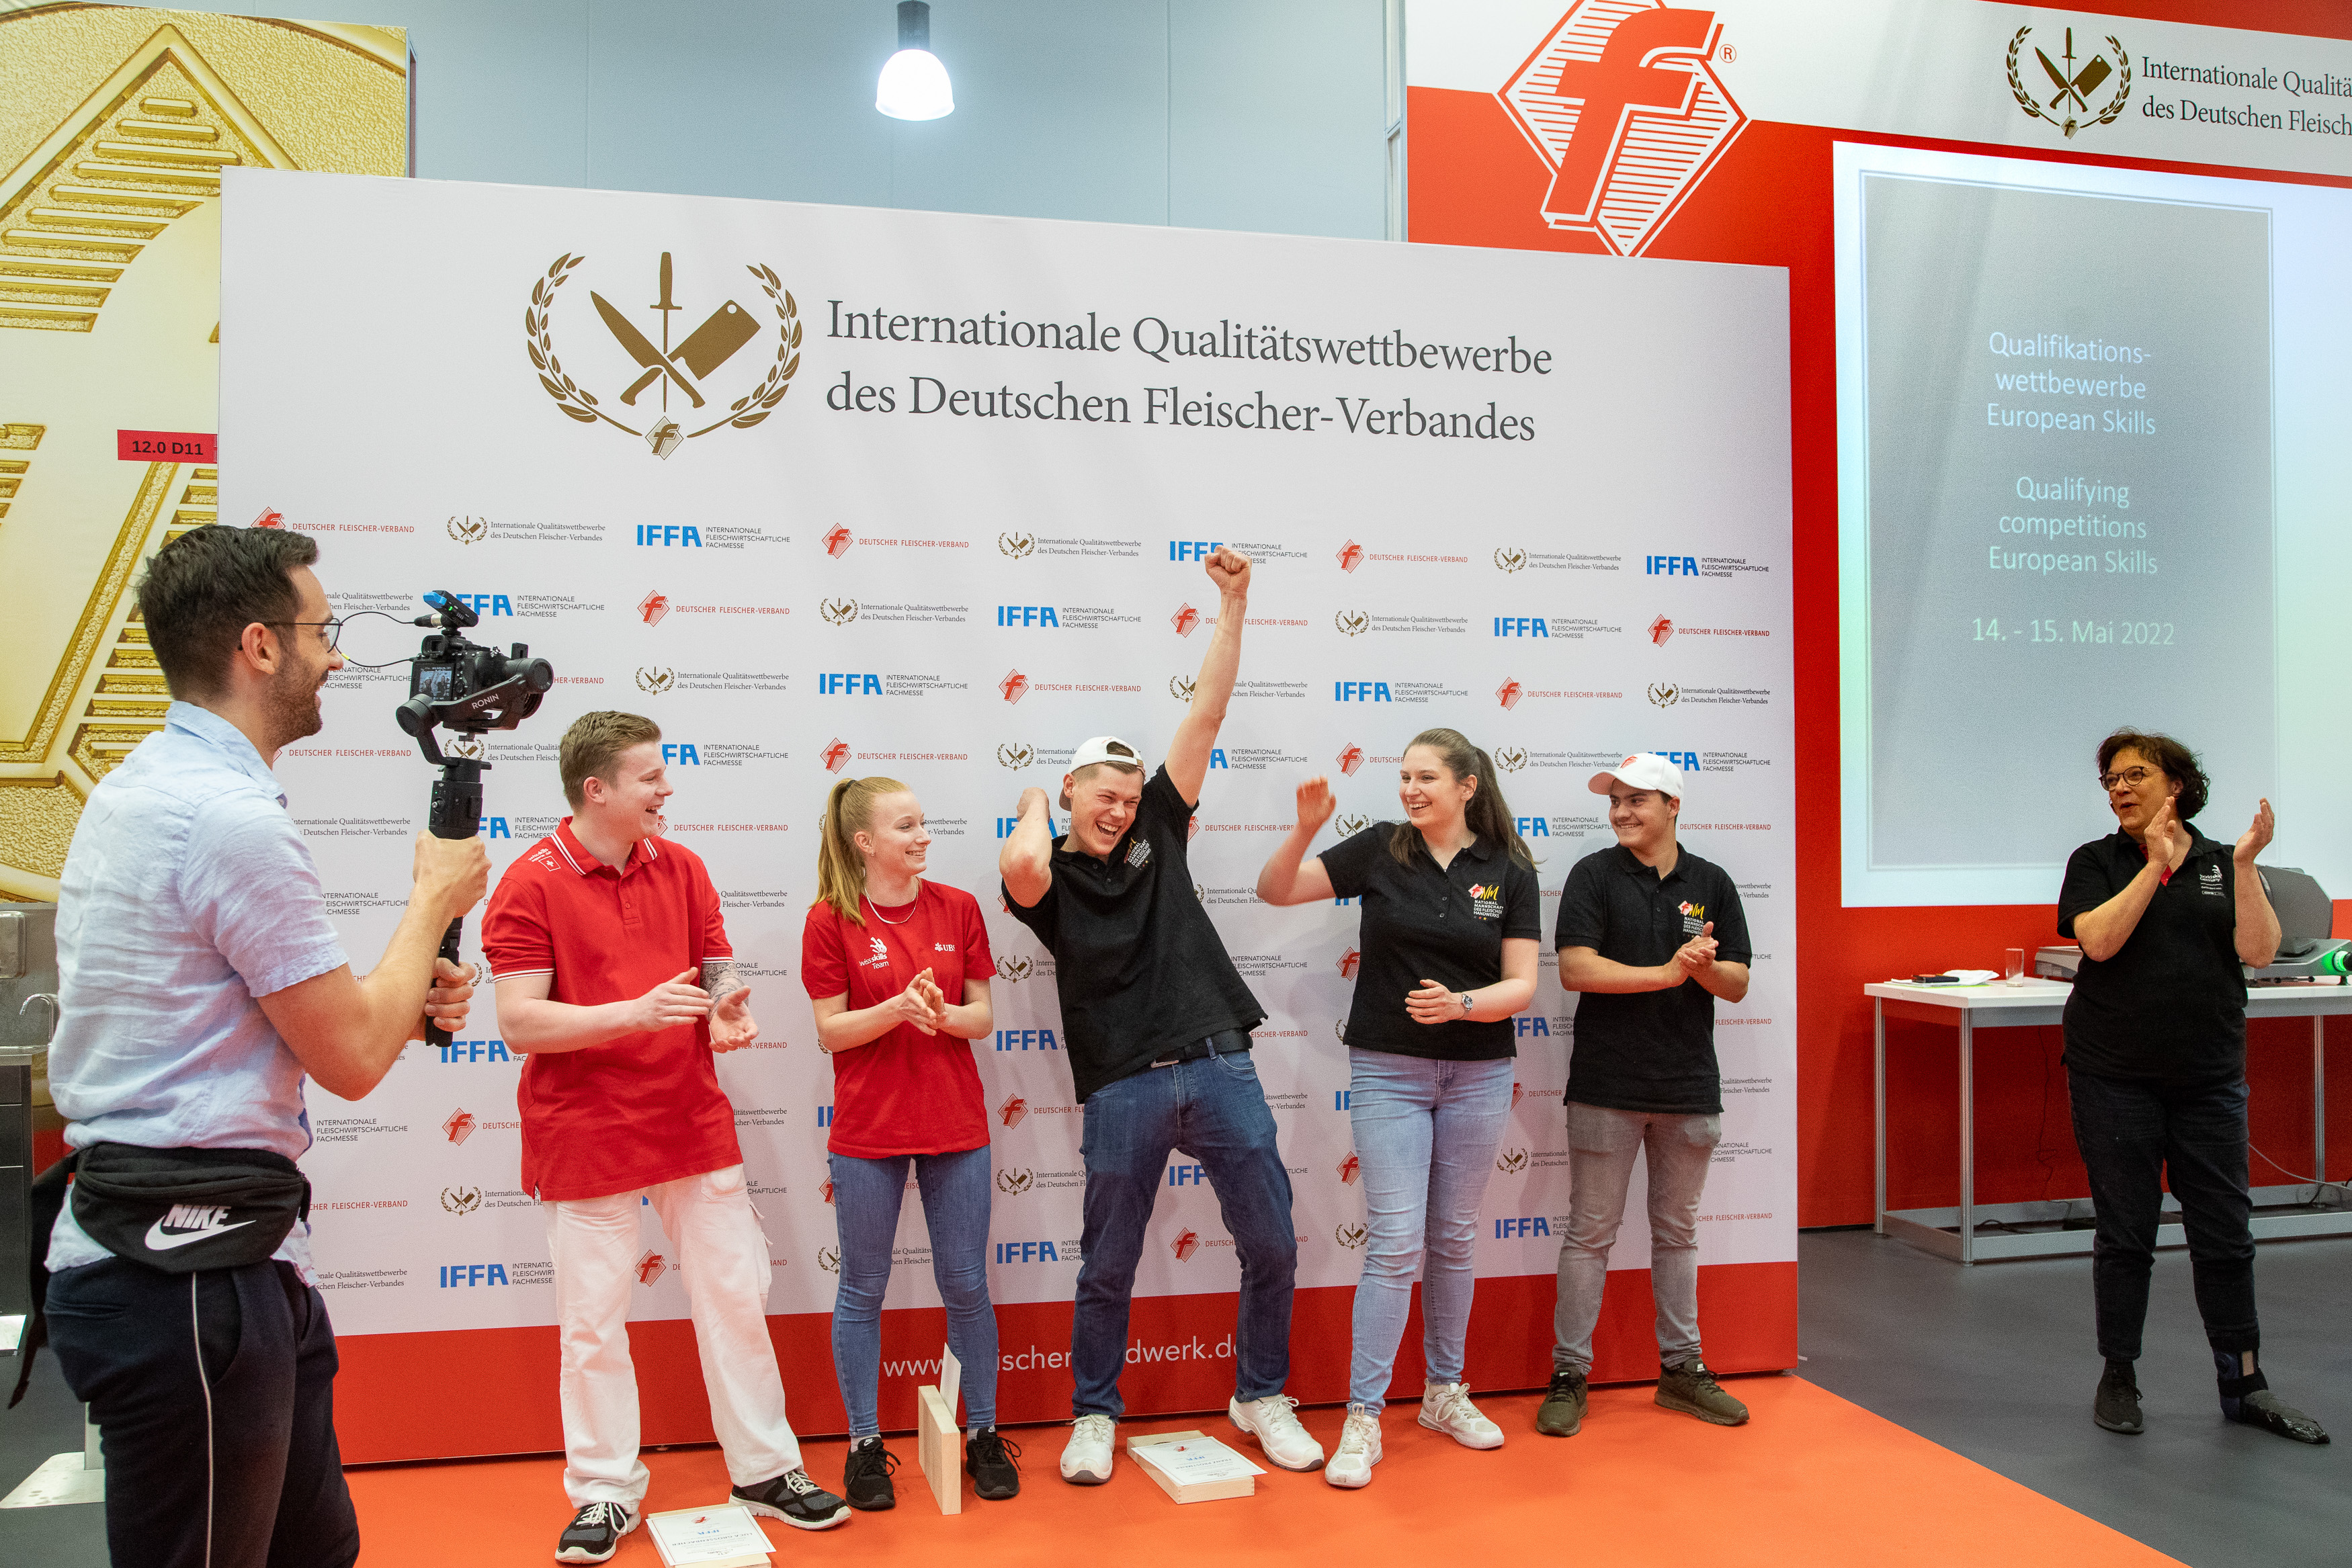 Internationale Qualitaetswettbewerbe  12.0 D11 International quality competitions - EuroSkills-FranzProstmeier -